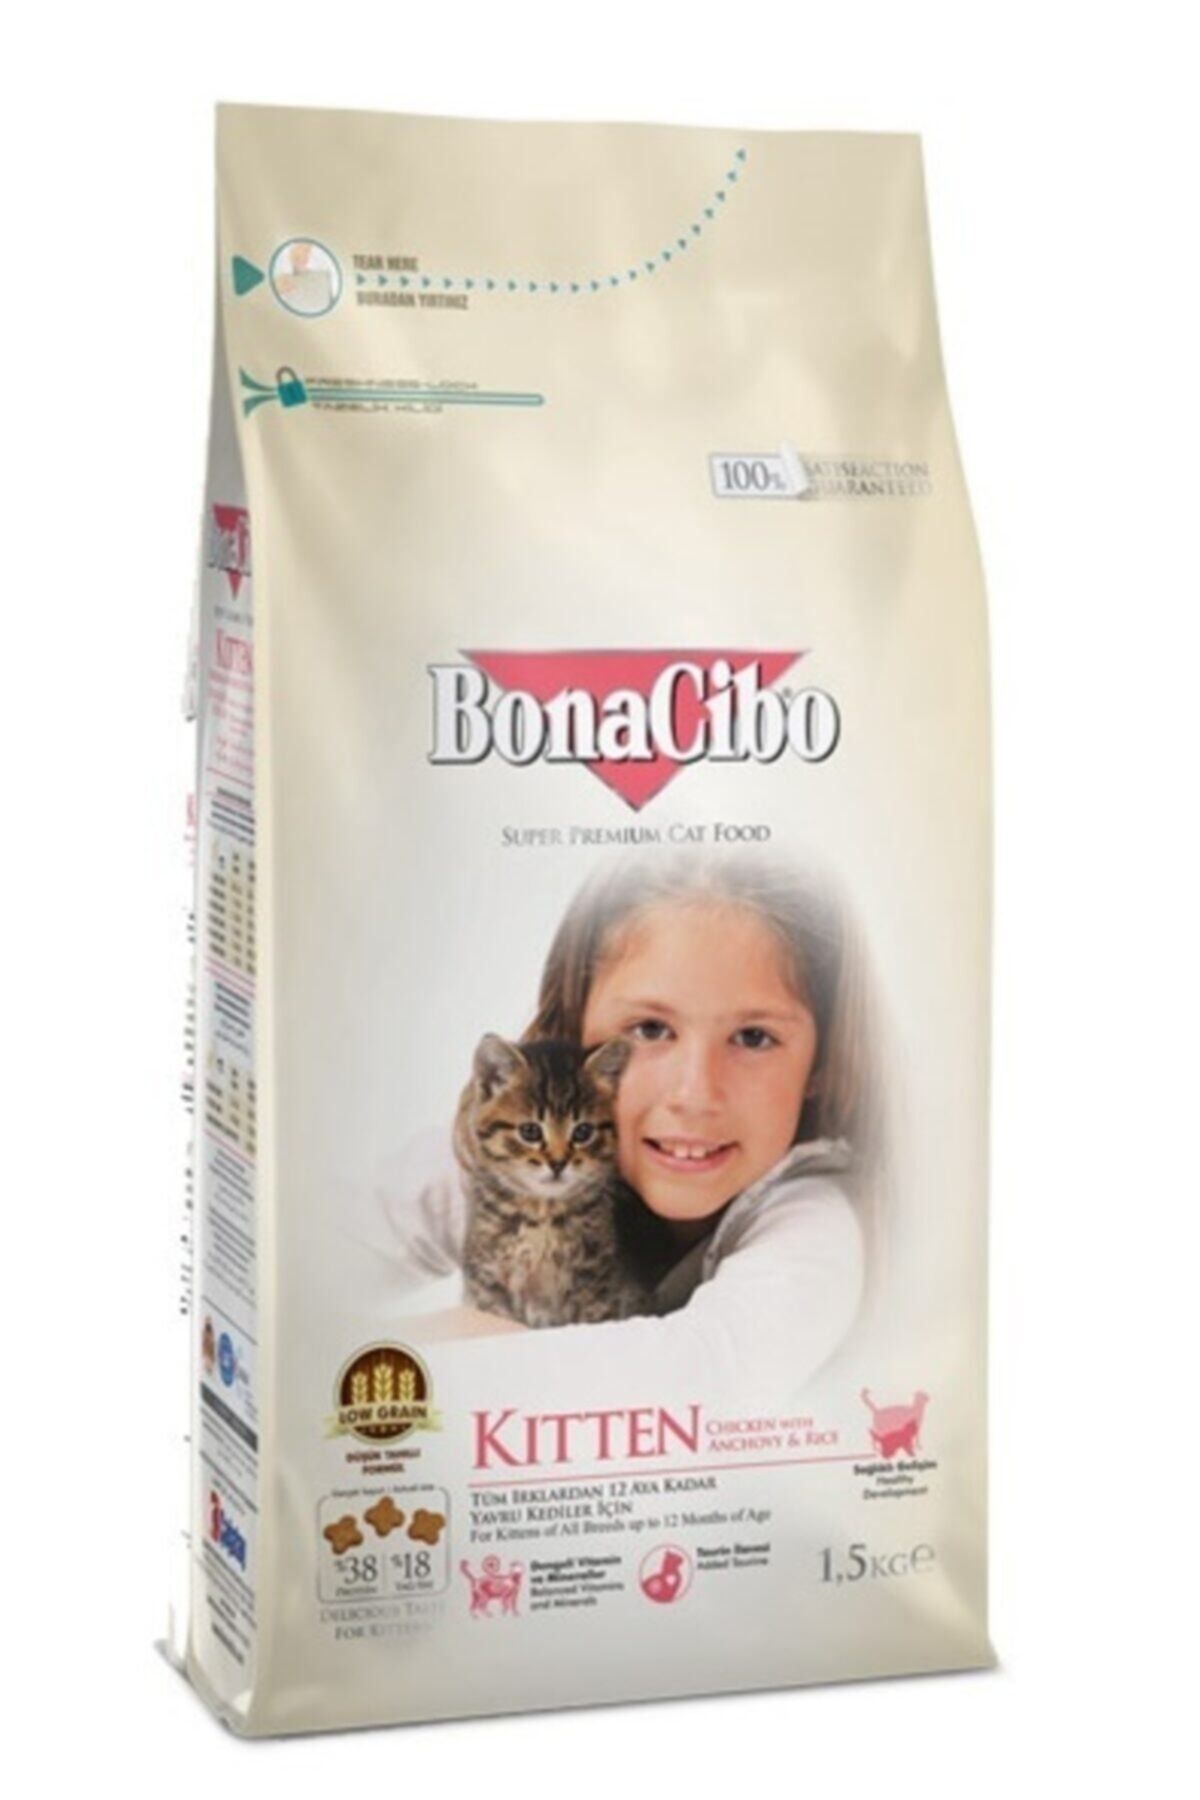 BonaCibo Kitten Yavru Kedi Maması 1,5 Kg Tavuklu Yavru Kedi Maması